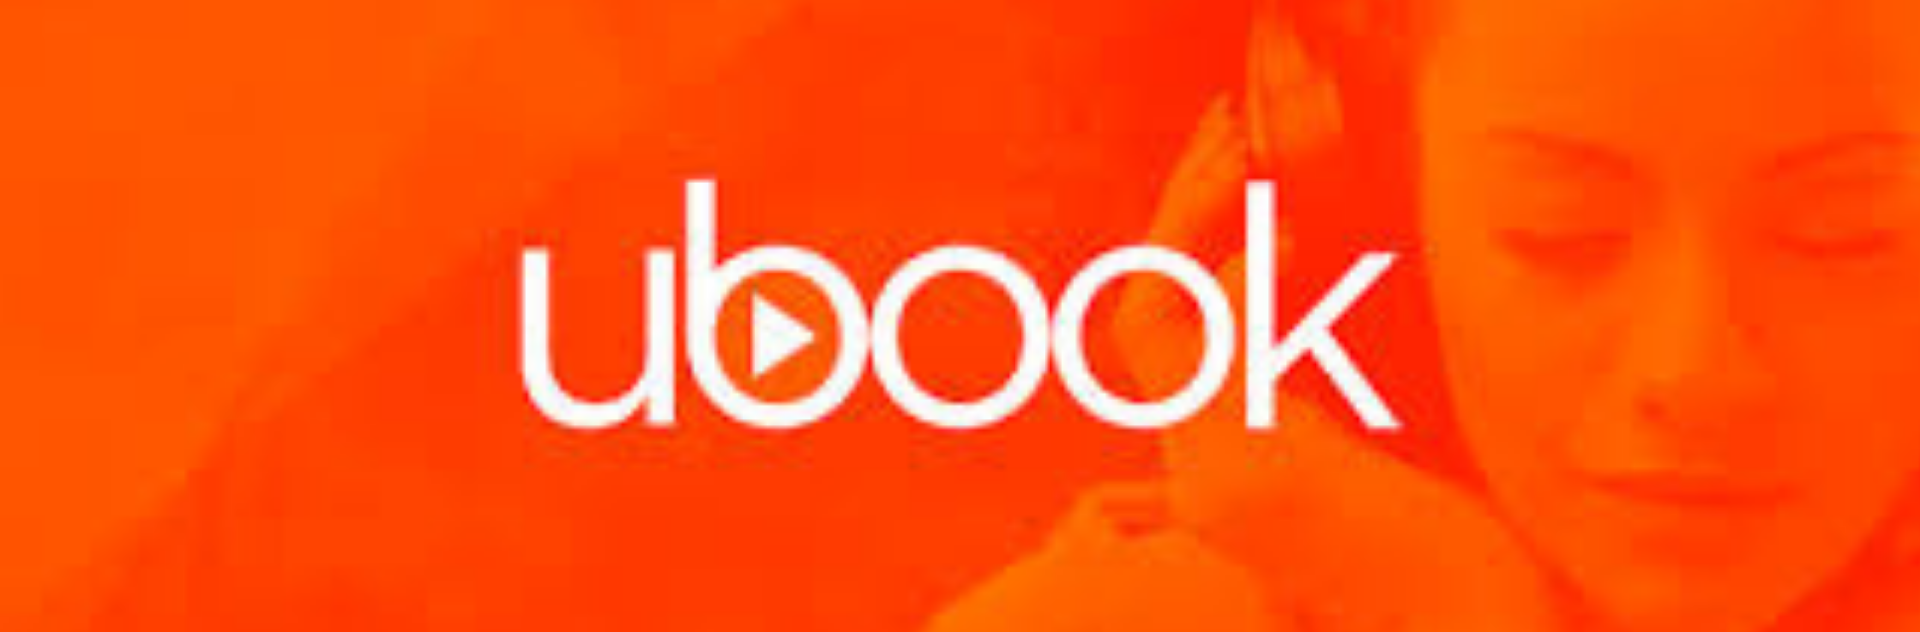 Ubook, de audiolivros, entra com pedido de IPO na B3